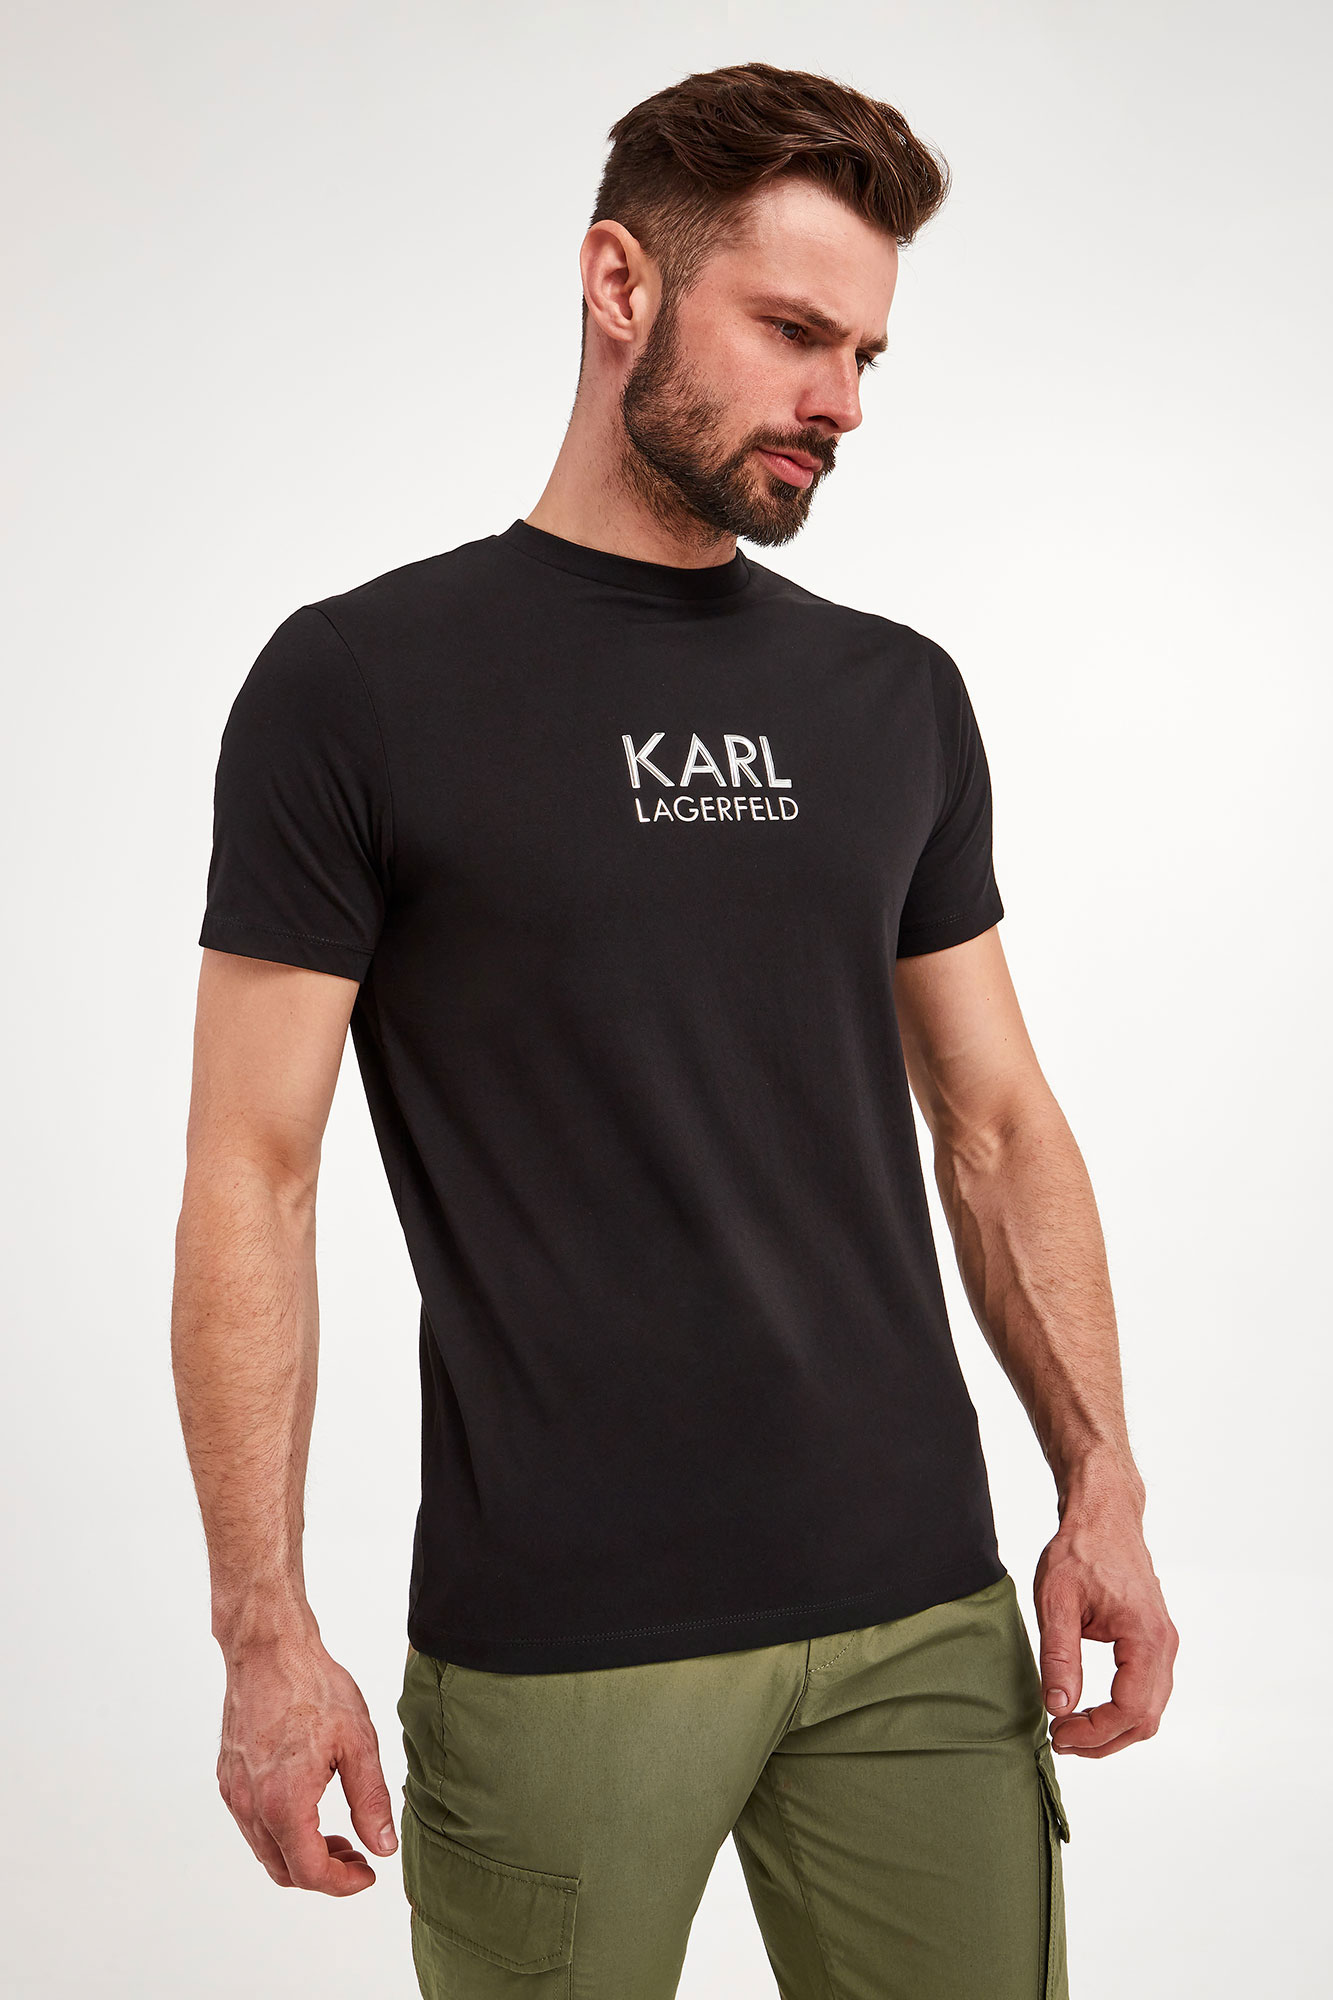 T-shirt KARL LAGERFELD rozmiar S – 63064-476